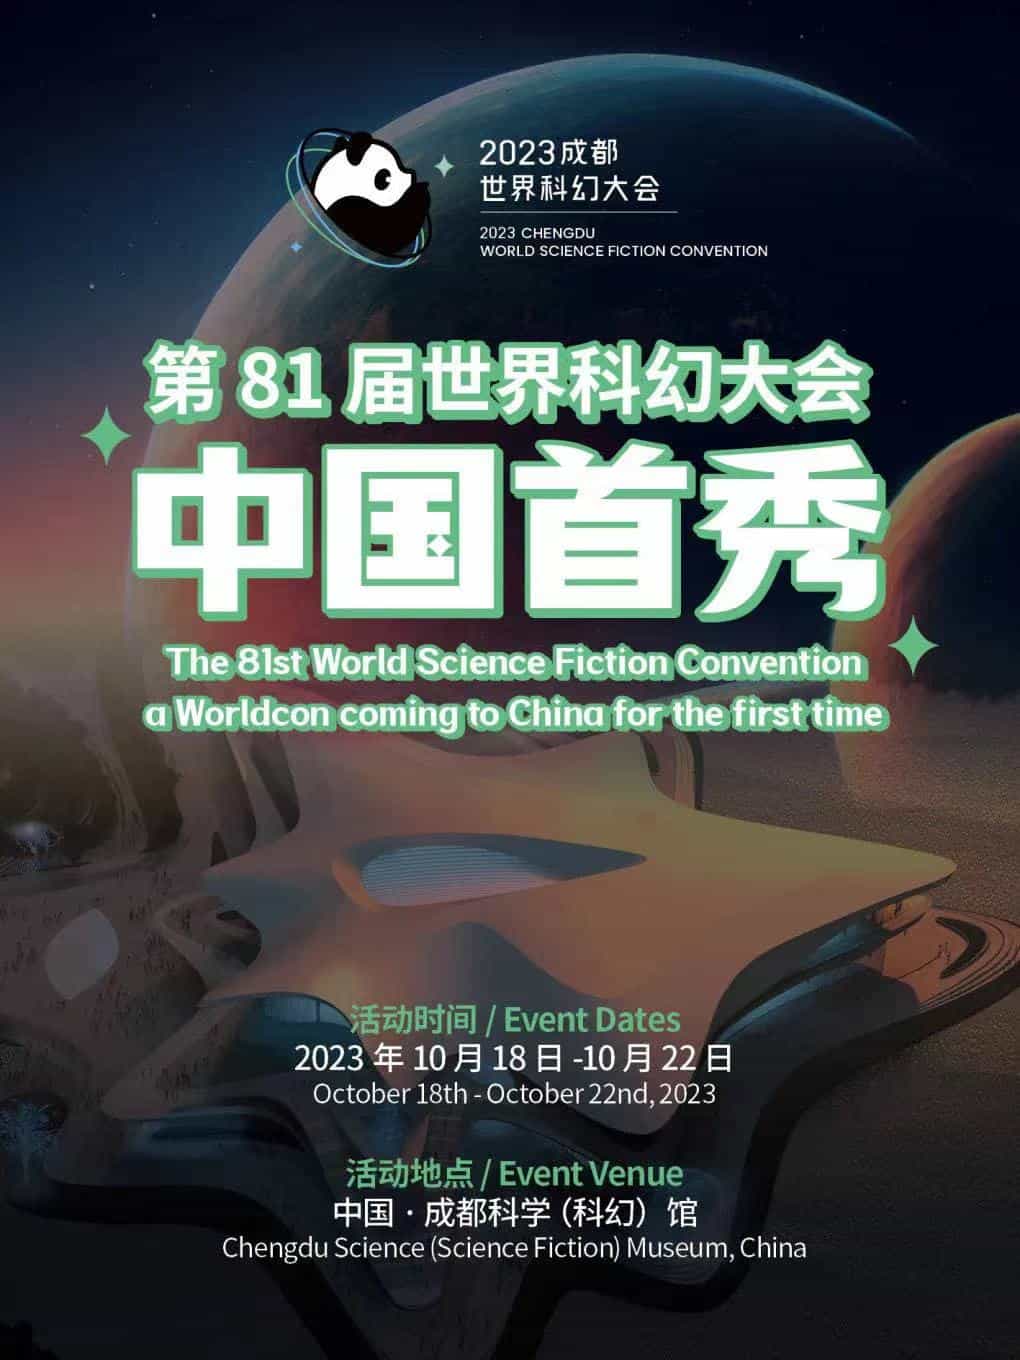 2023 Chengdu World Science Fiction Convention chengdu expat 1